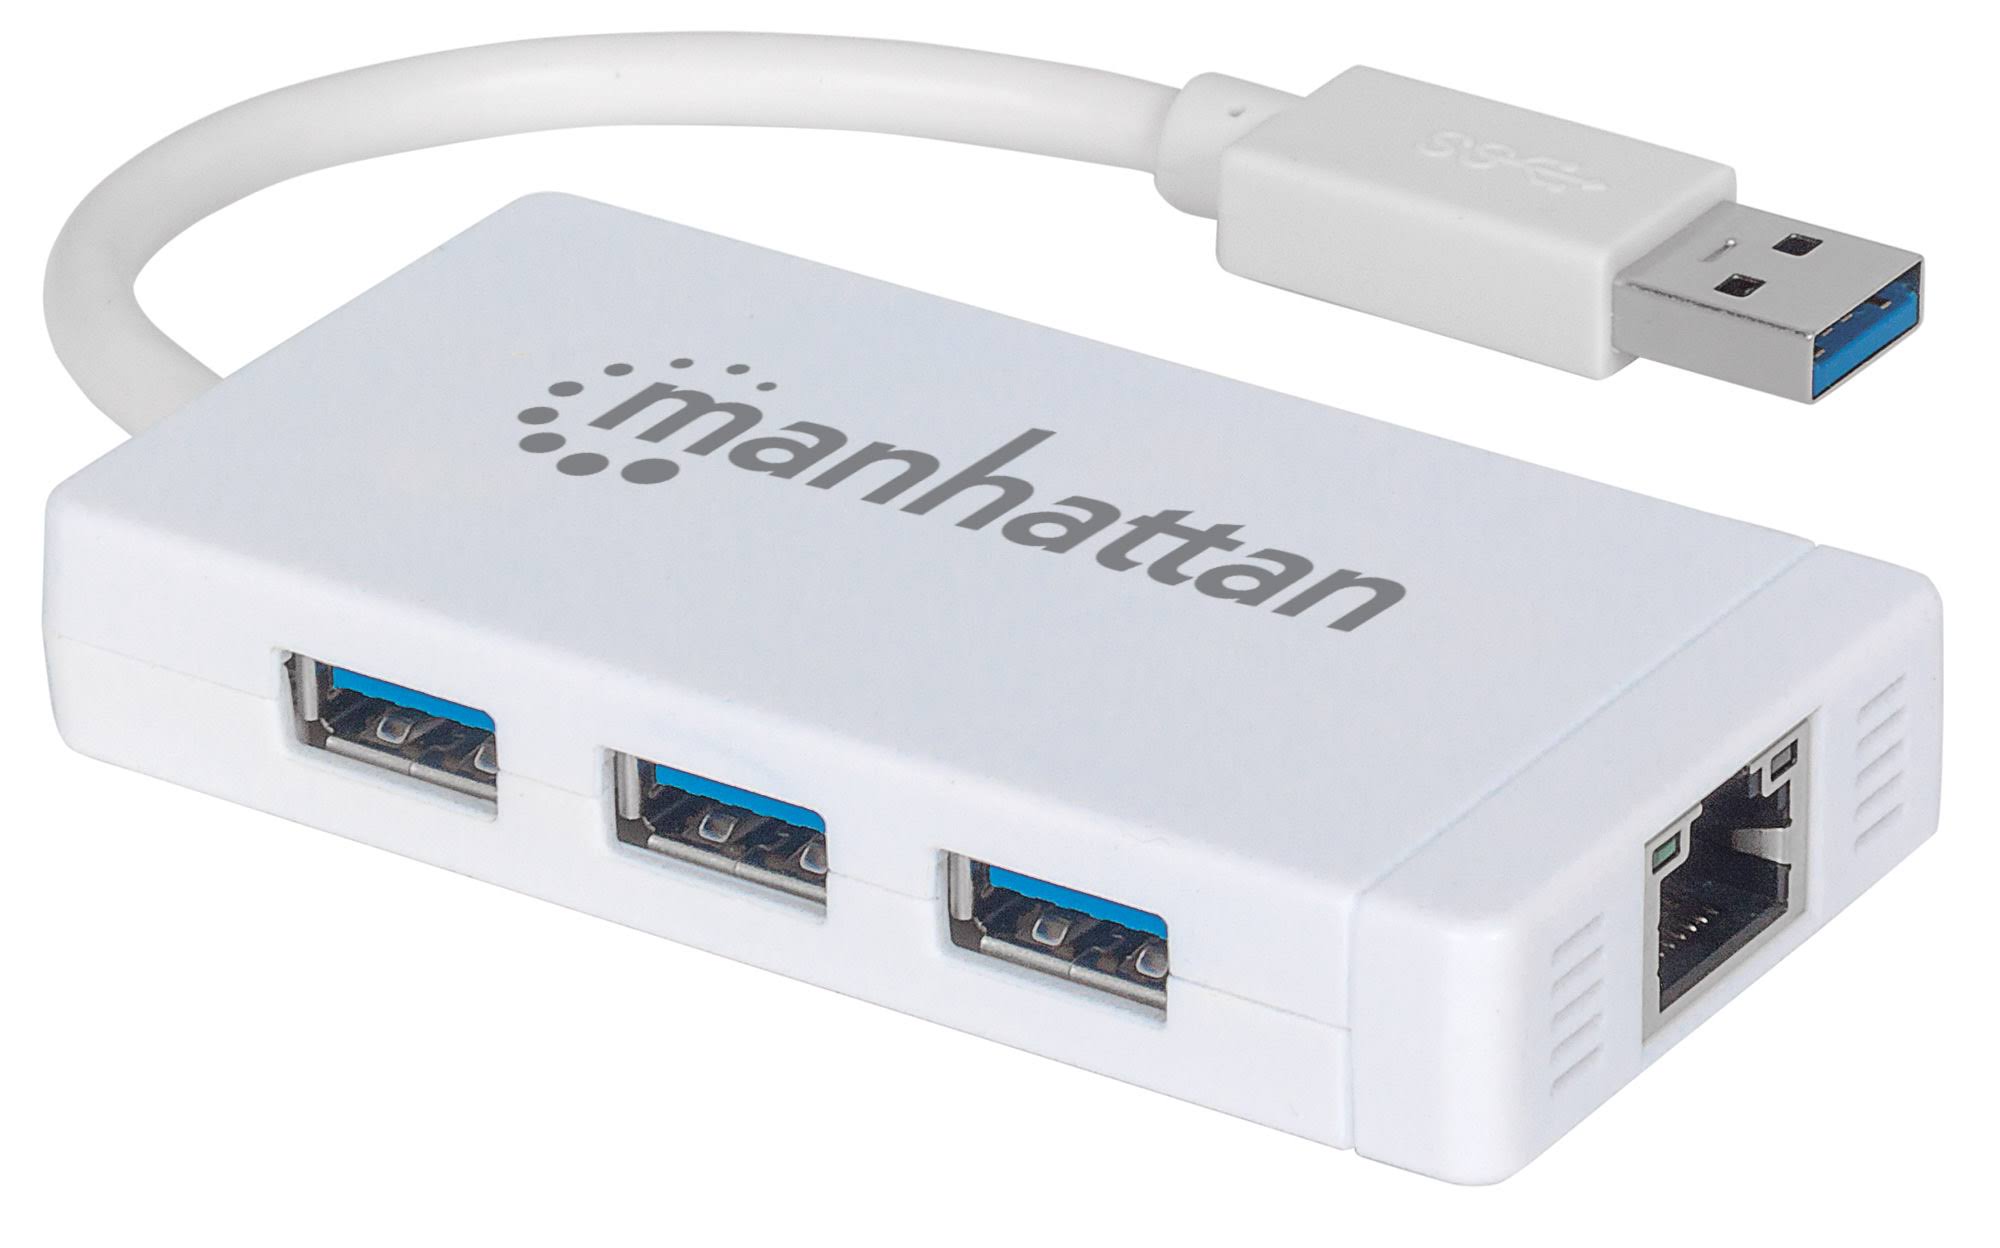 Manhattan 507578 USB 3.0 Hub with Gigabit Ethernet Adapter - 3 Port